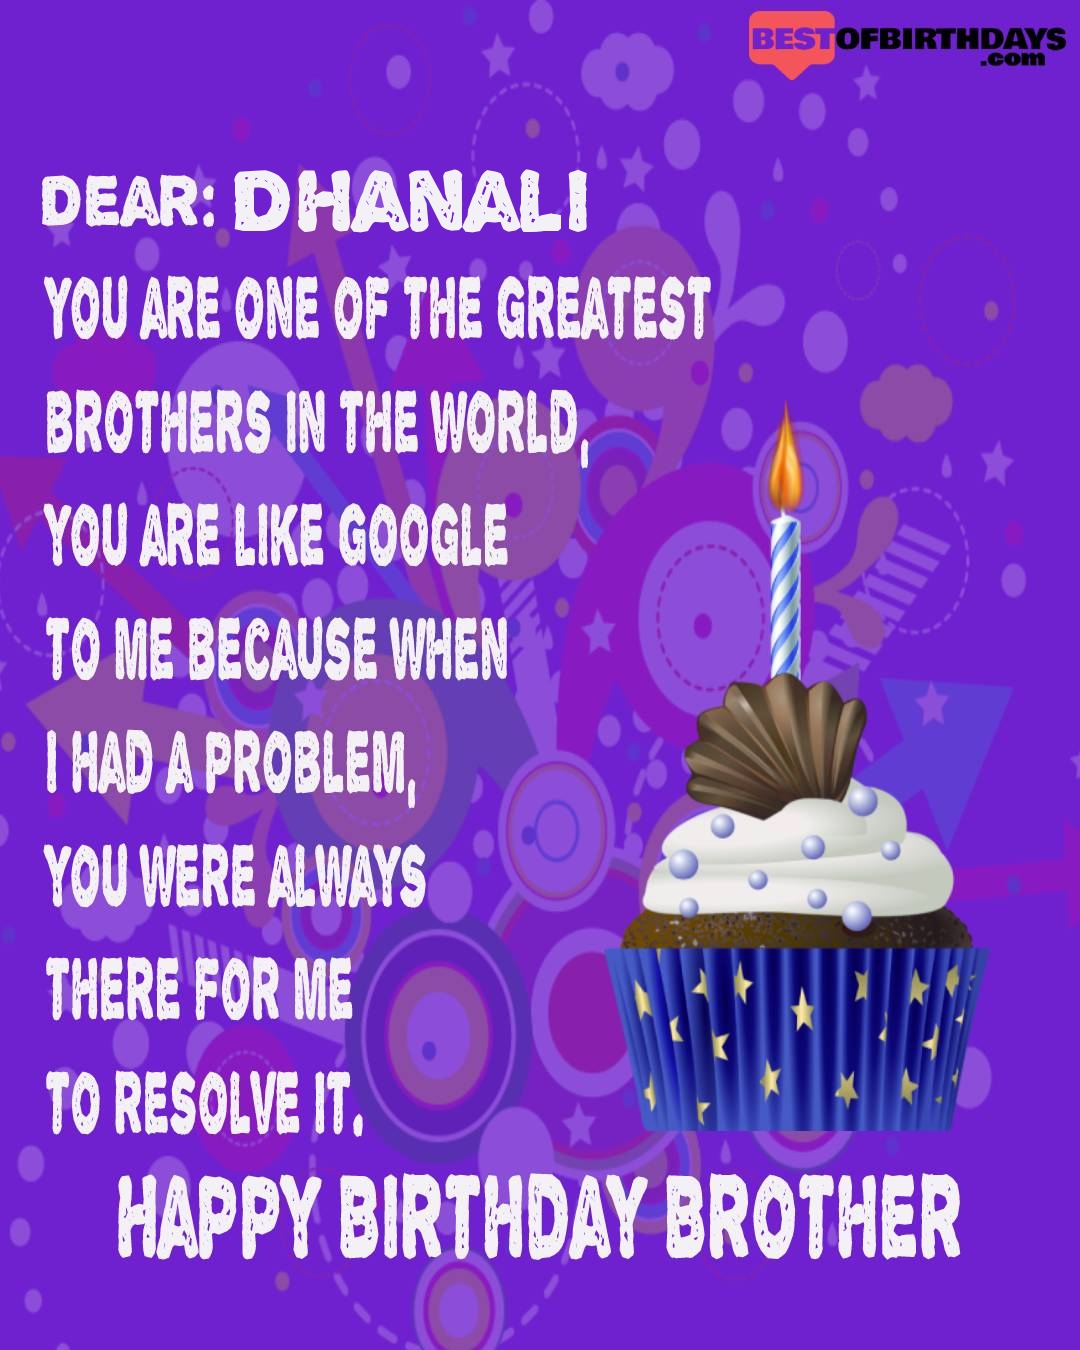 Happy birthday dhanali bhai brother bro